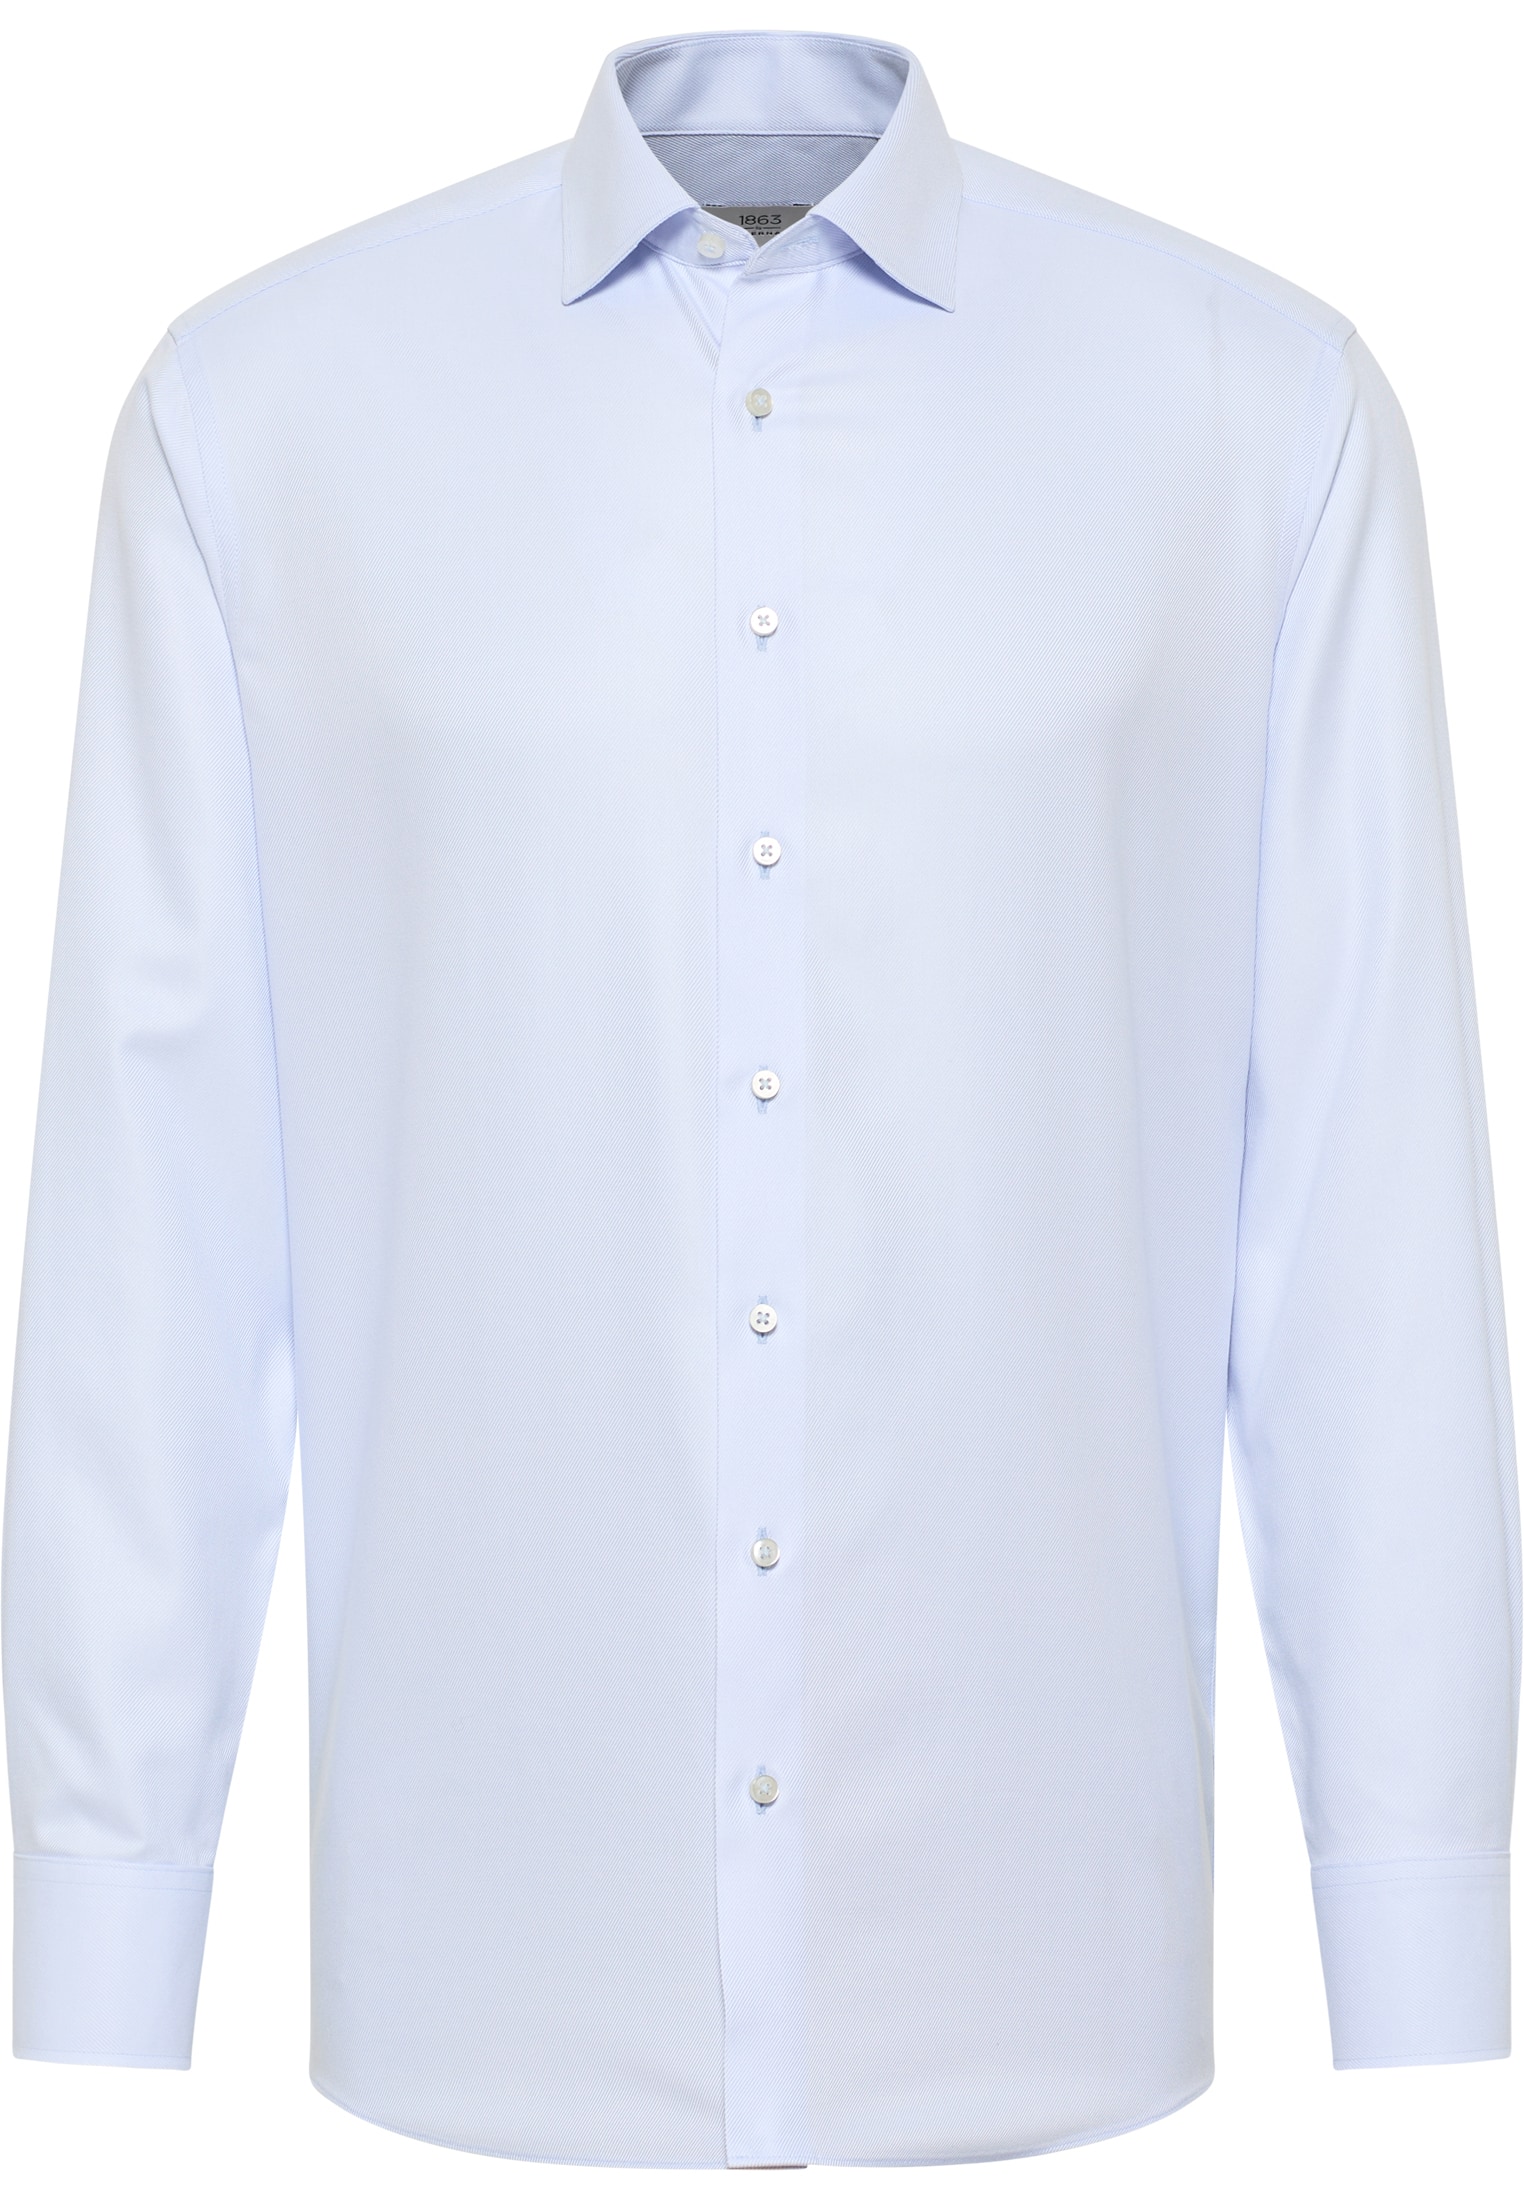 MODERN FIT Overhemd in lyseblå gestructureerd